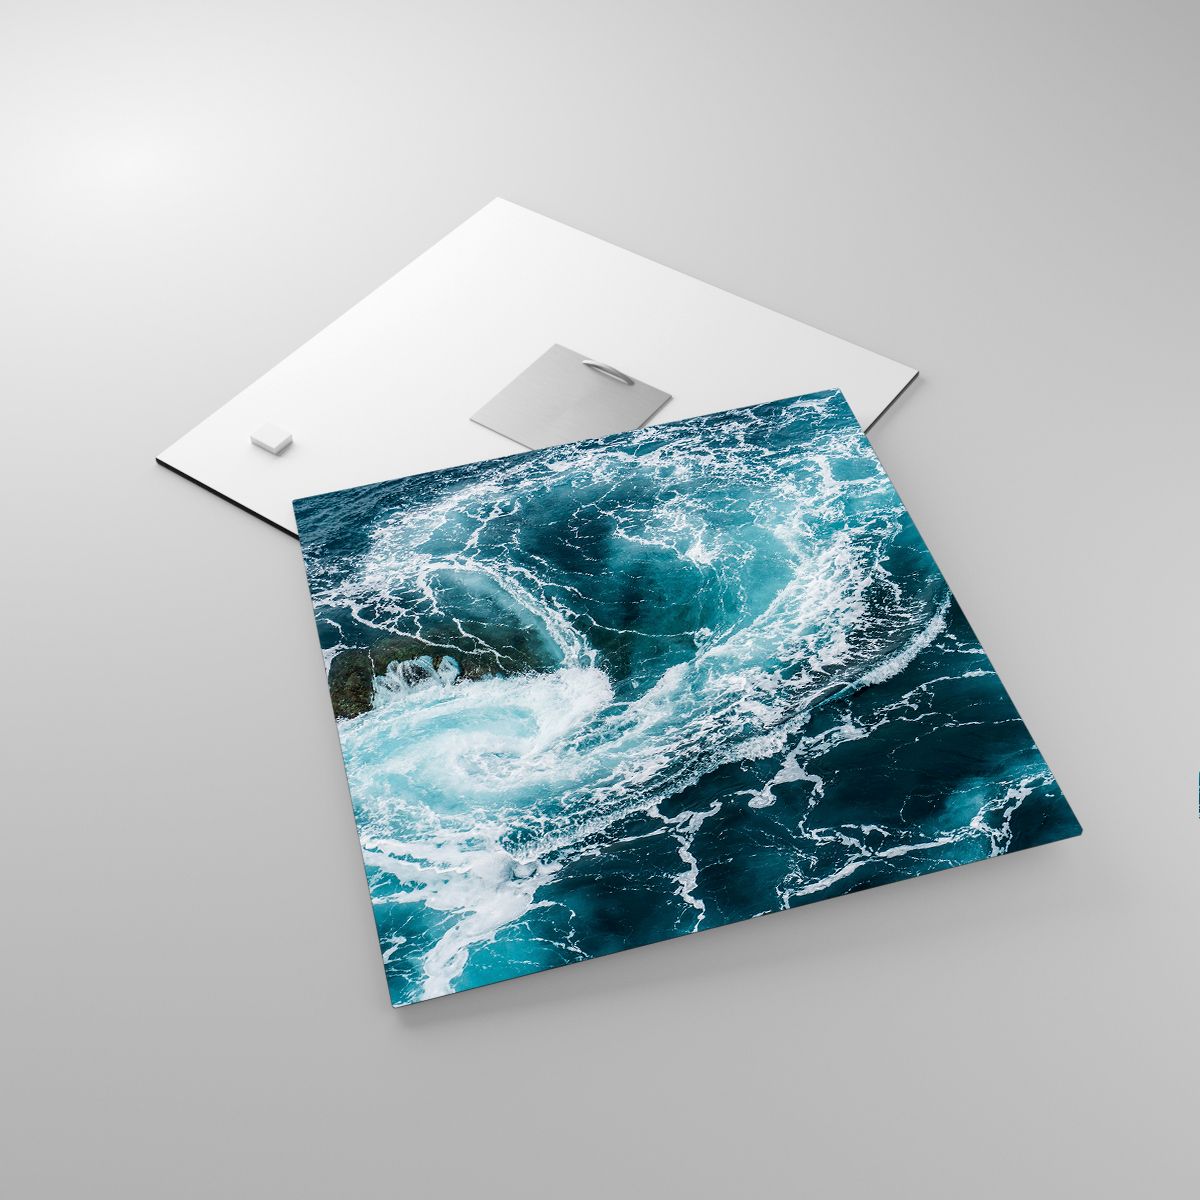 Glasbild Meer, Glasbild Abstraktion, Glasbild Kunst, Glasbild Meereswelle, Glasbild Ozean